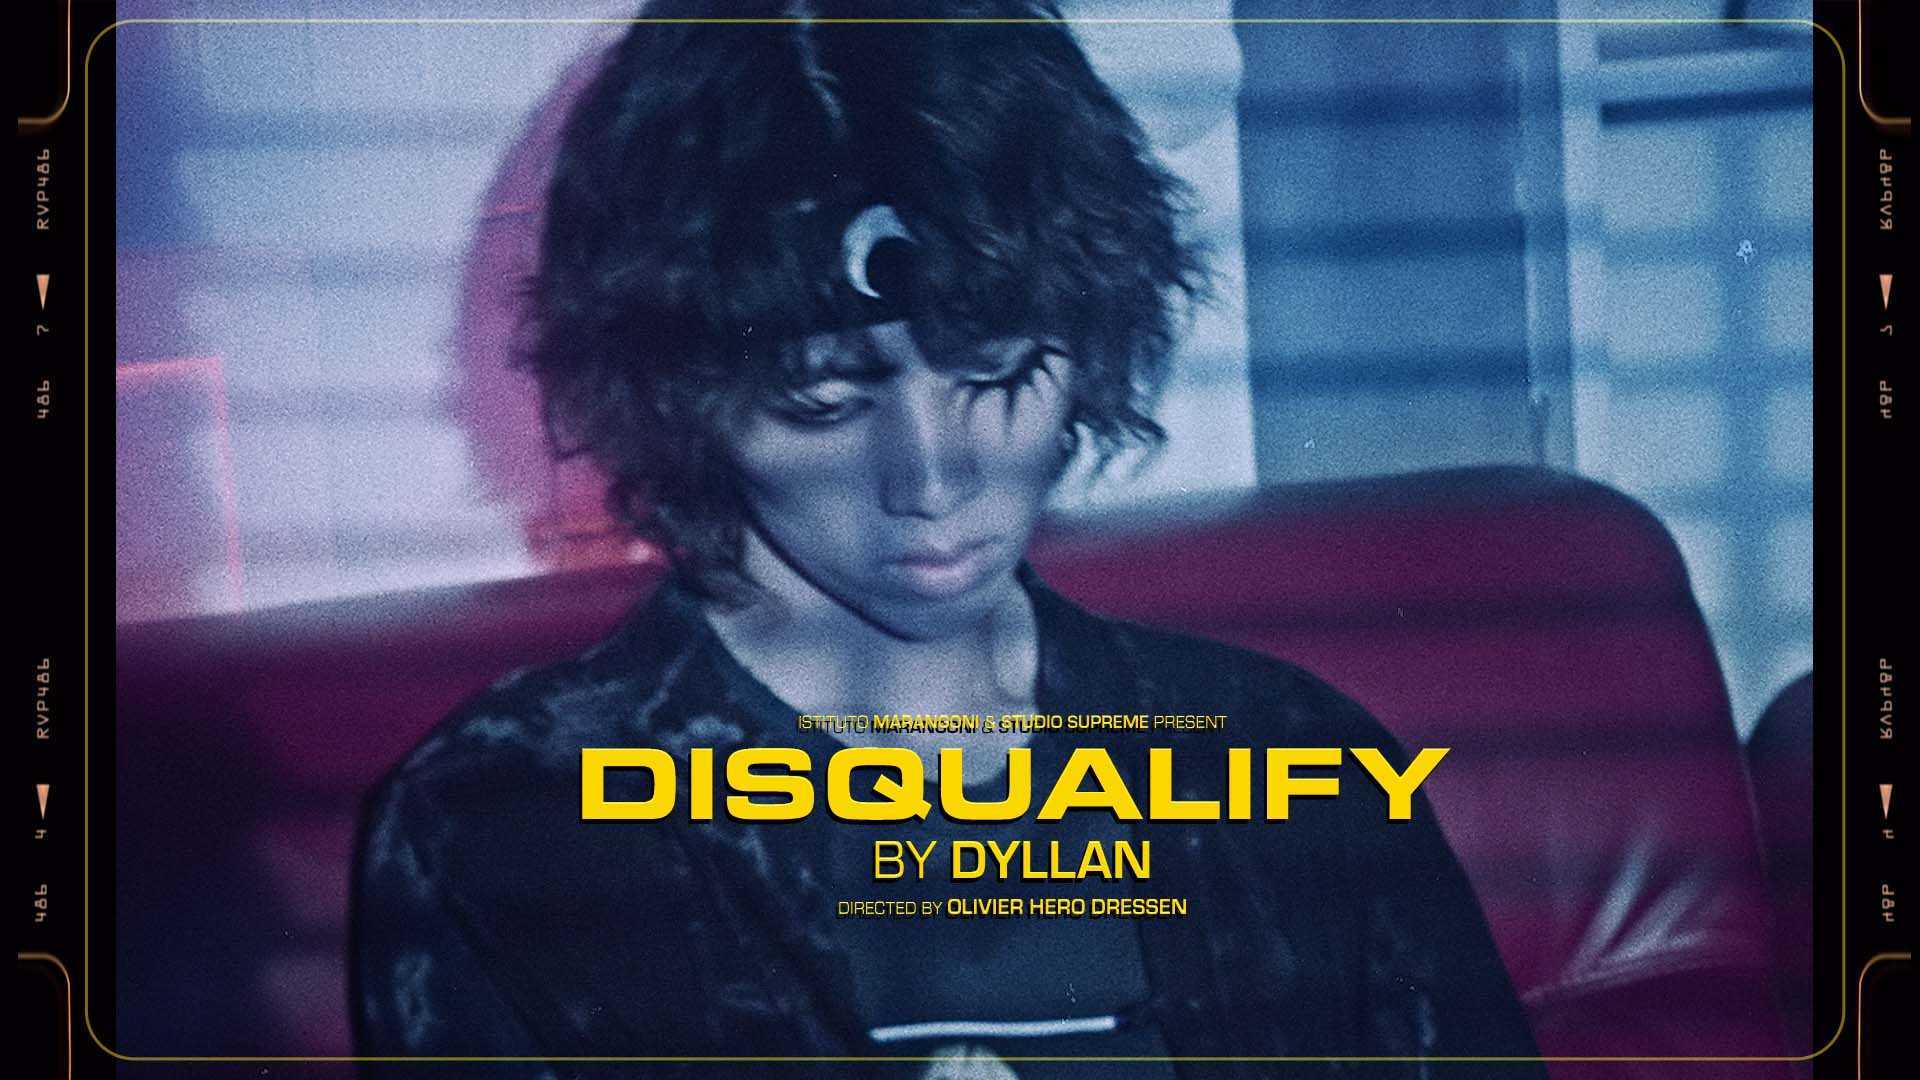 "Disqualify" By Dyllan